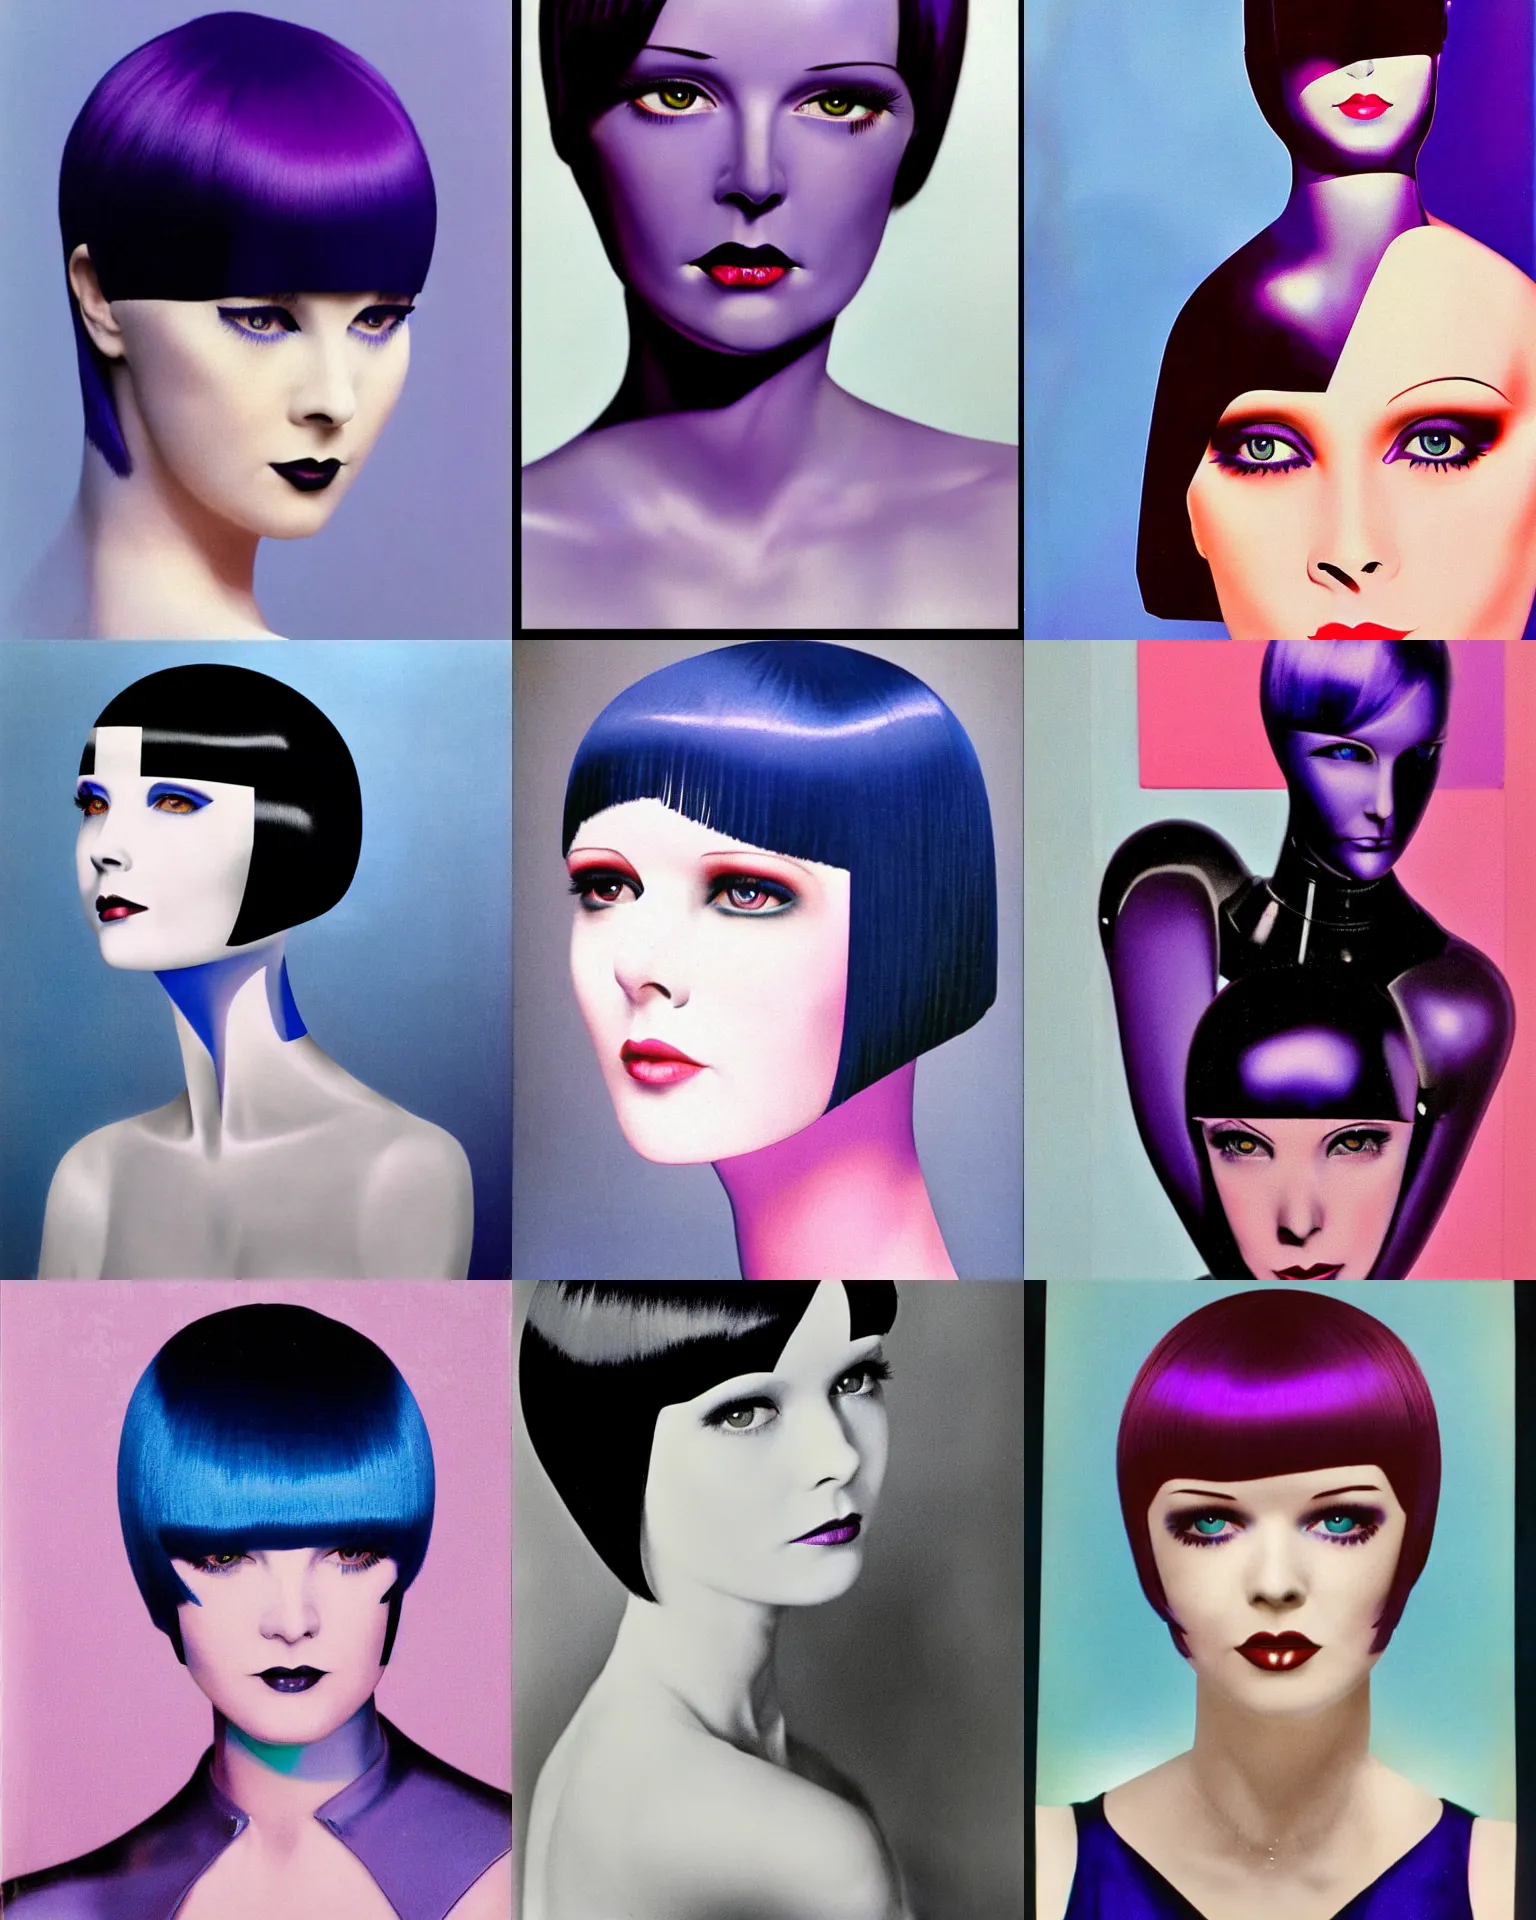 Prompt: mary louise brooks, half robot, 1 9 8 0 s airbrush, blue rim lighting, geometric makeup, purple shiny bob haircut